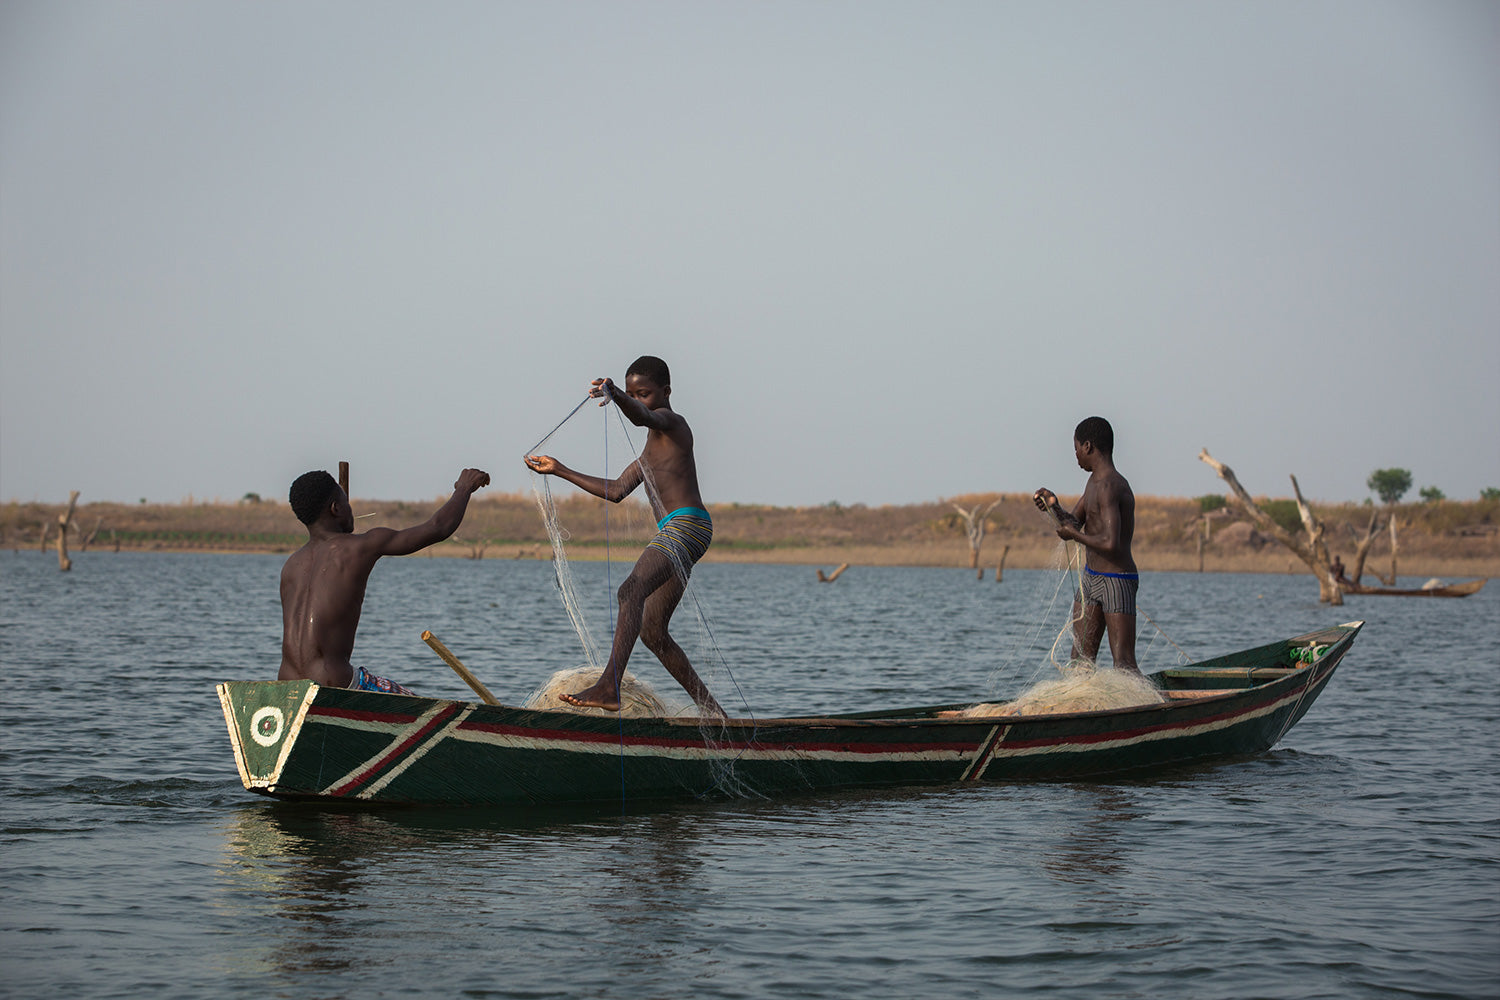 Child Slavery In Ghana's Fishing Industry